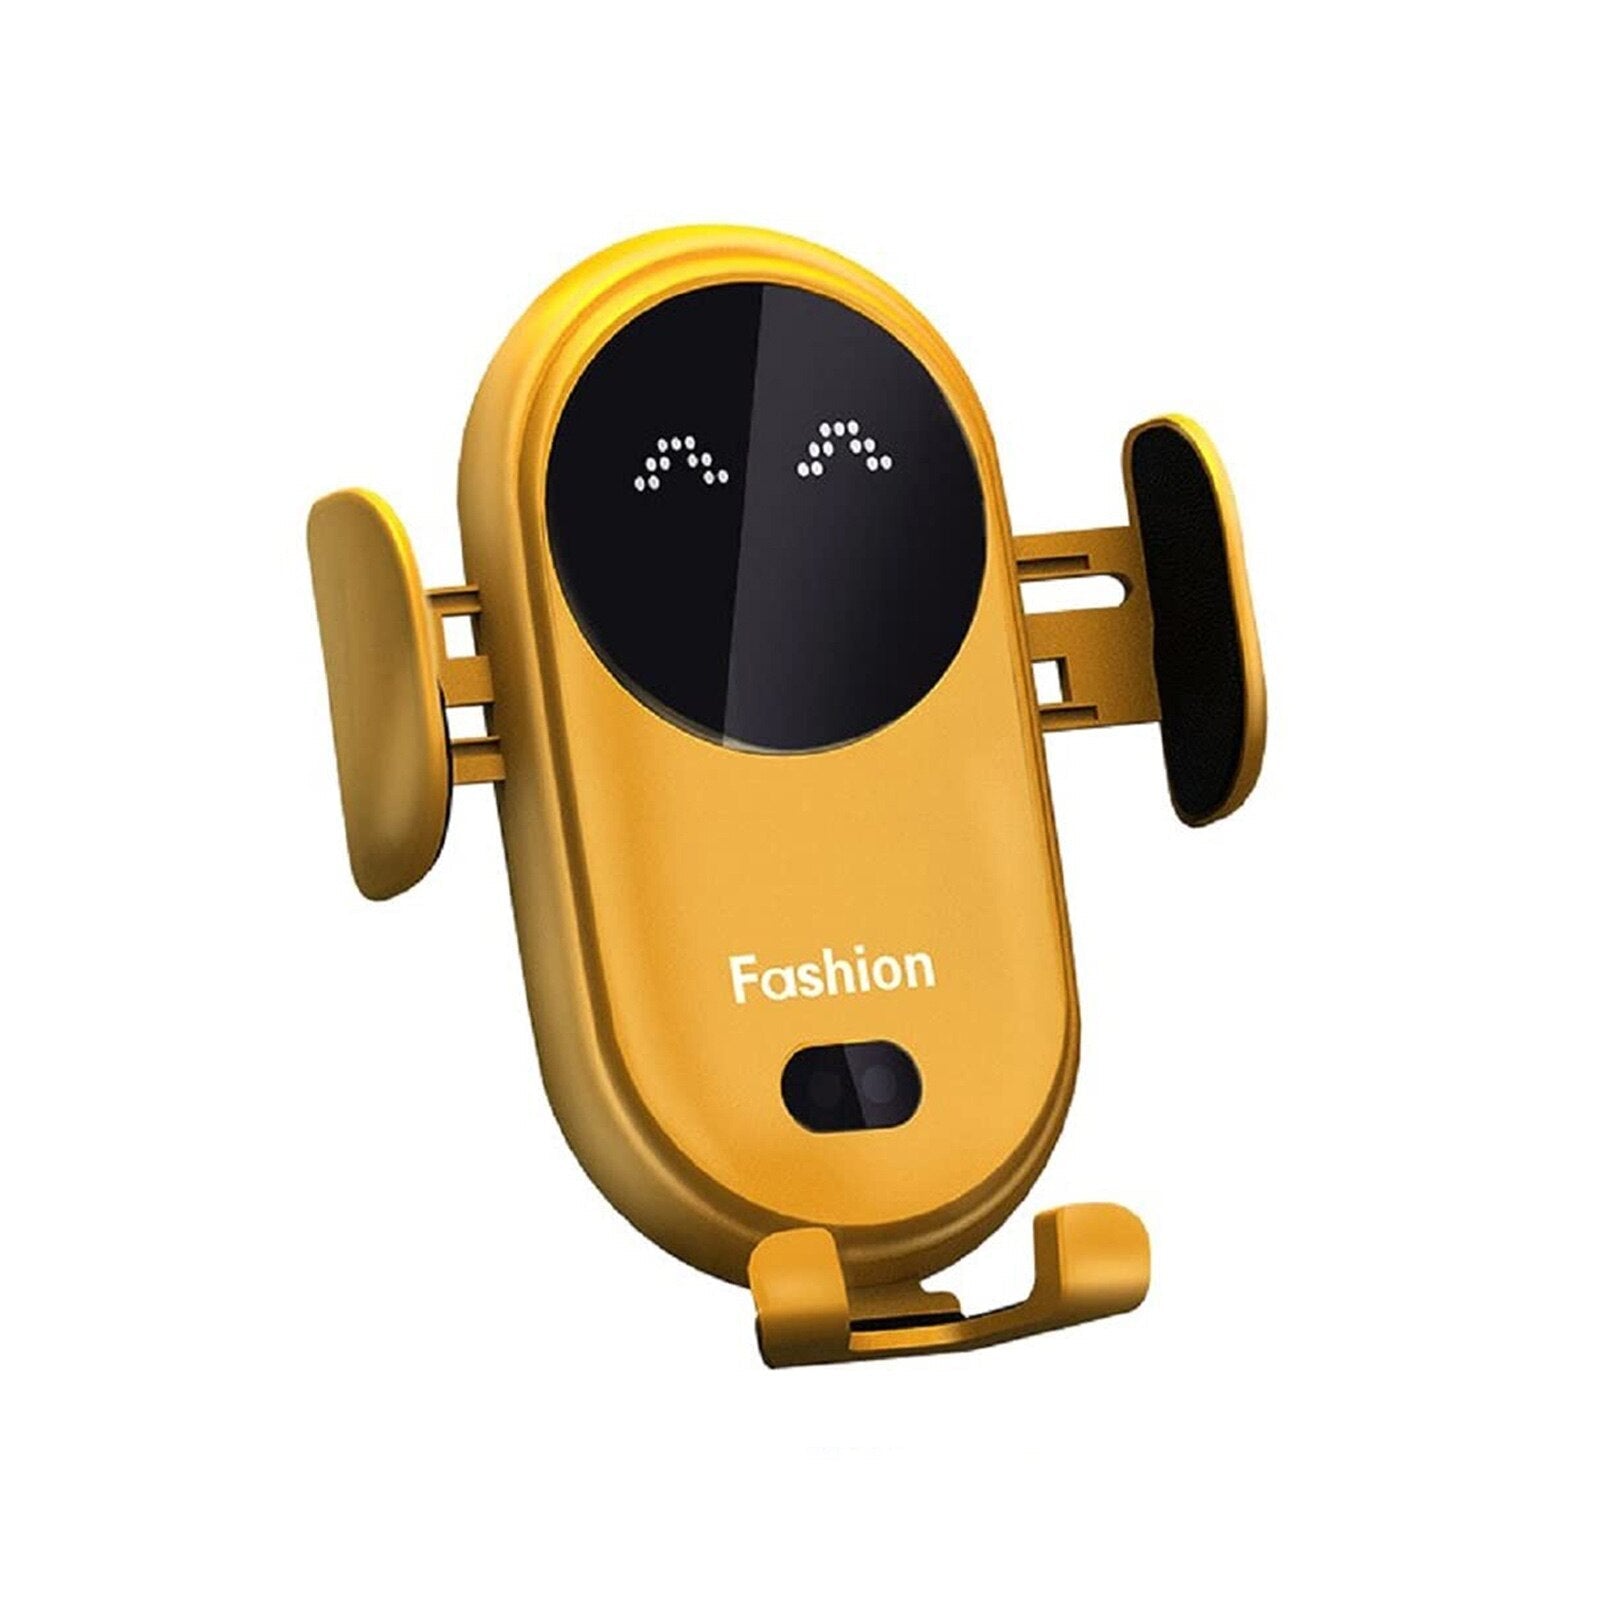 Happy Robo™ | Telefonhalter und kabelloses Ladegerät